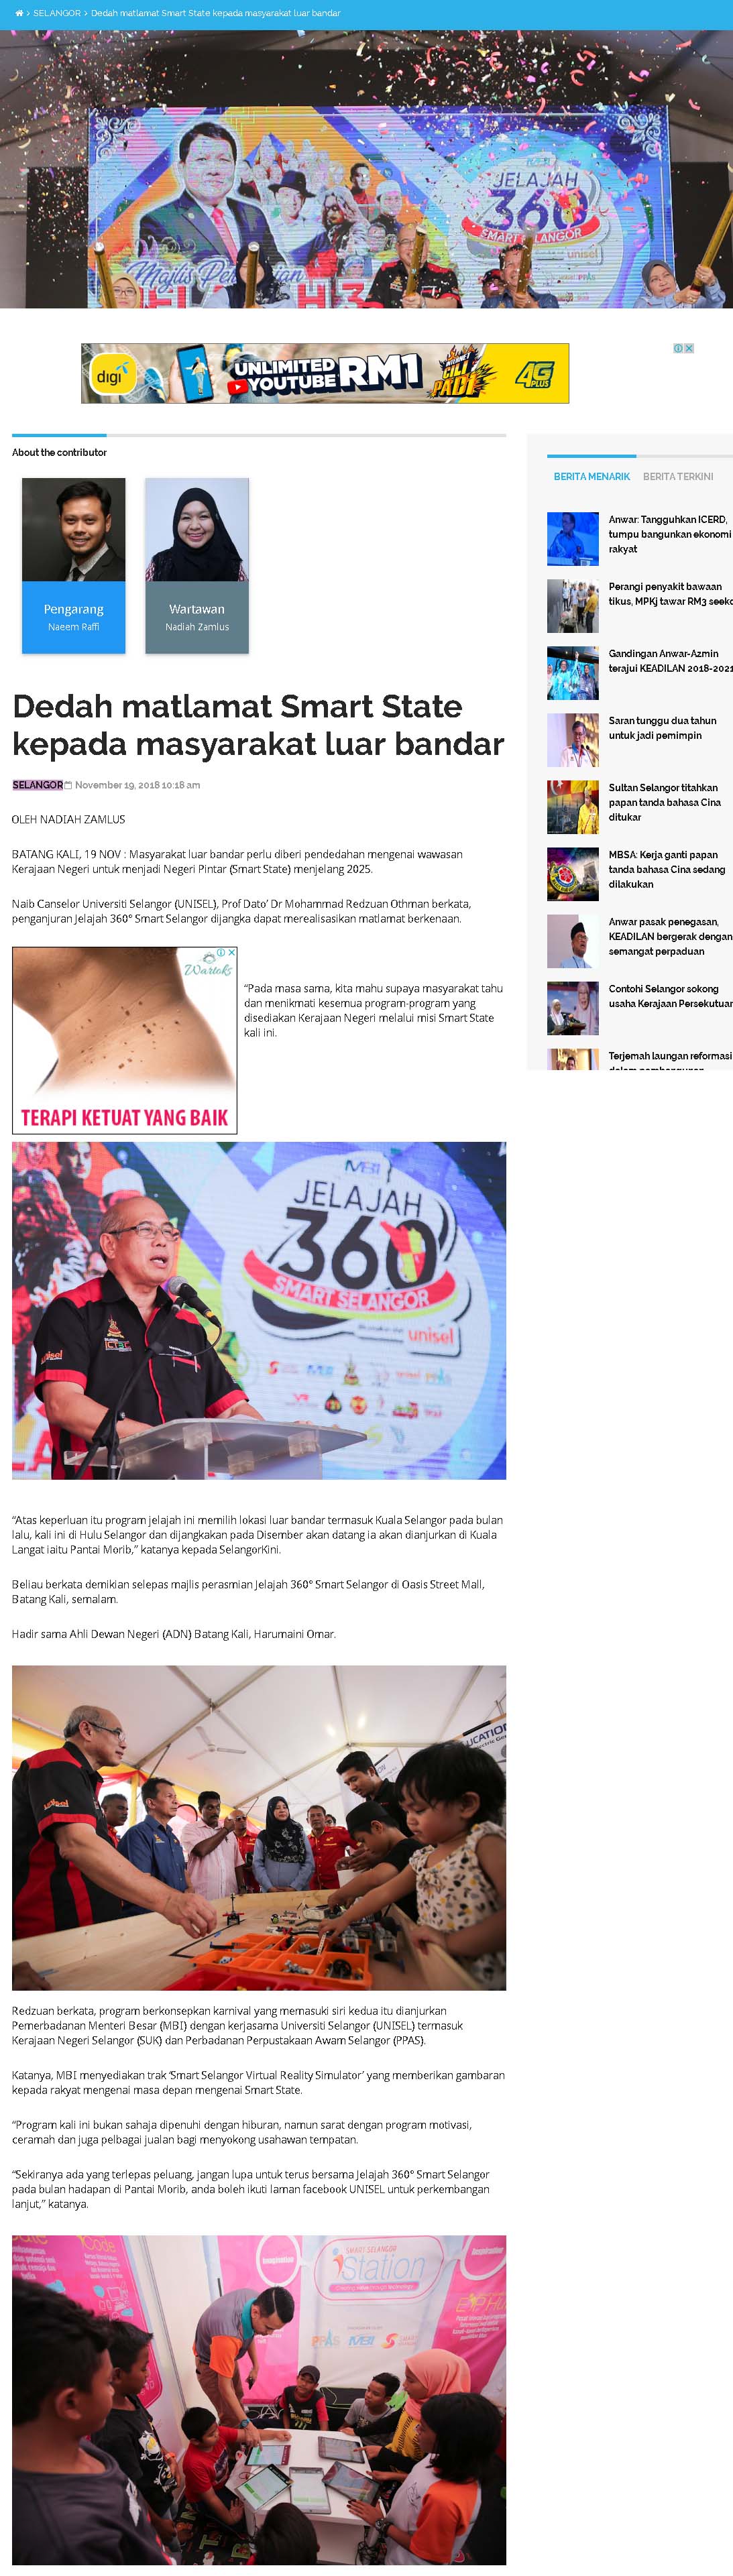 Selangorkini Online - 19 November 2018